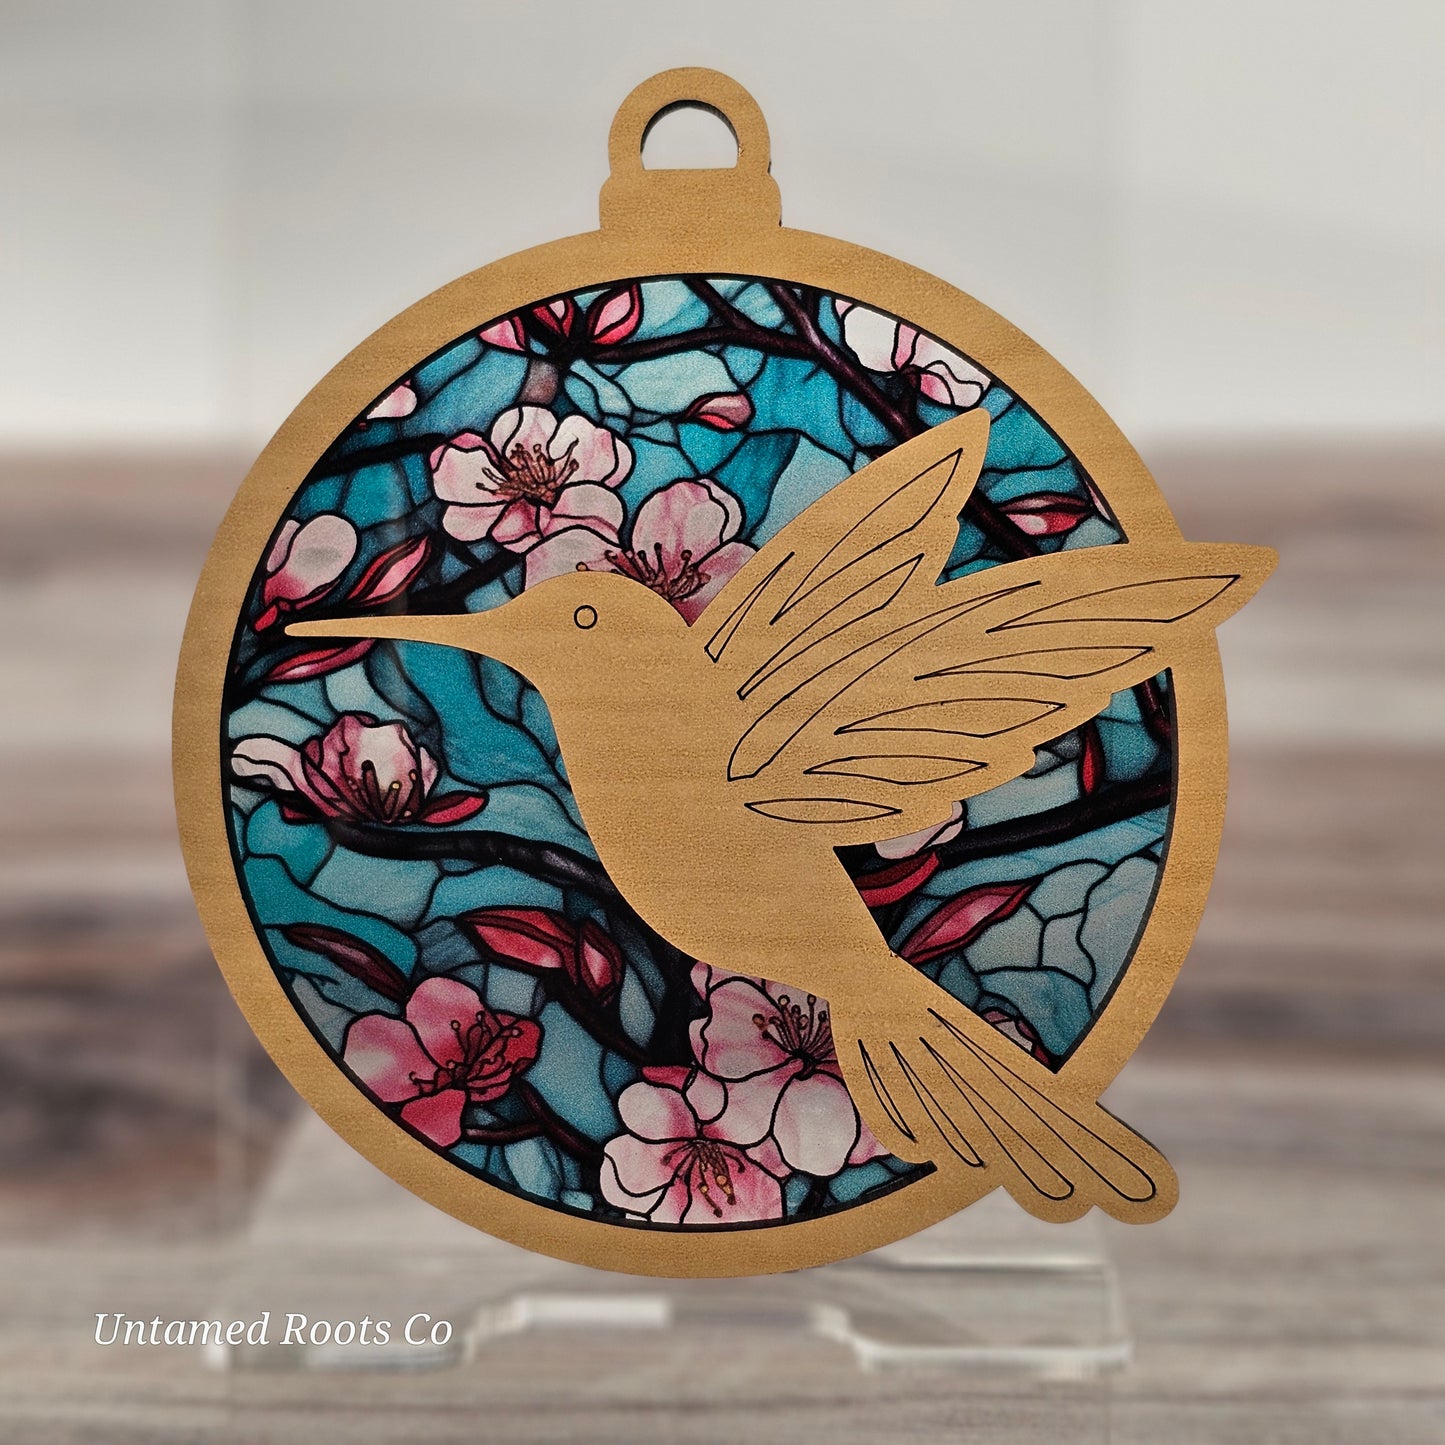 Hummingbird Suncatcher Ornament - Translucent Cherry Blossoms